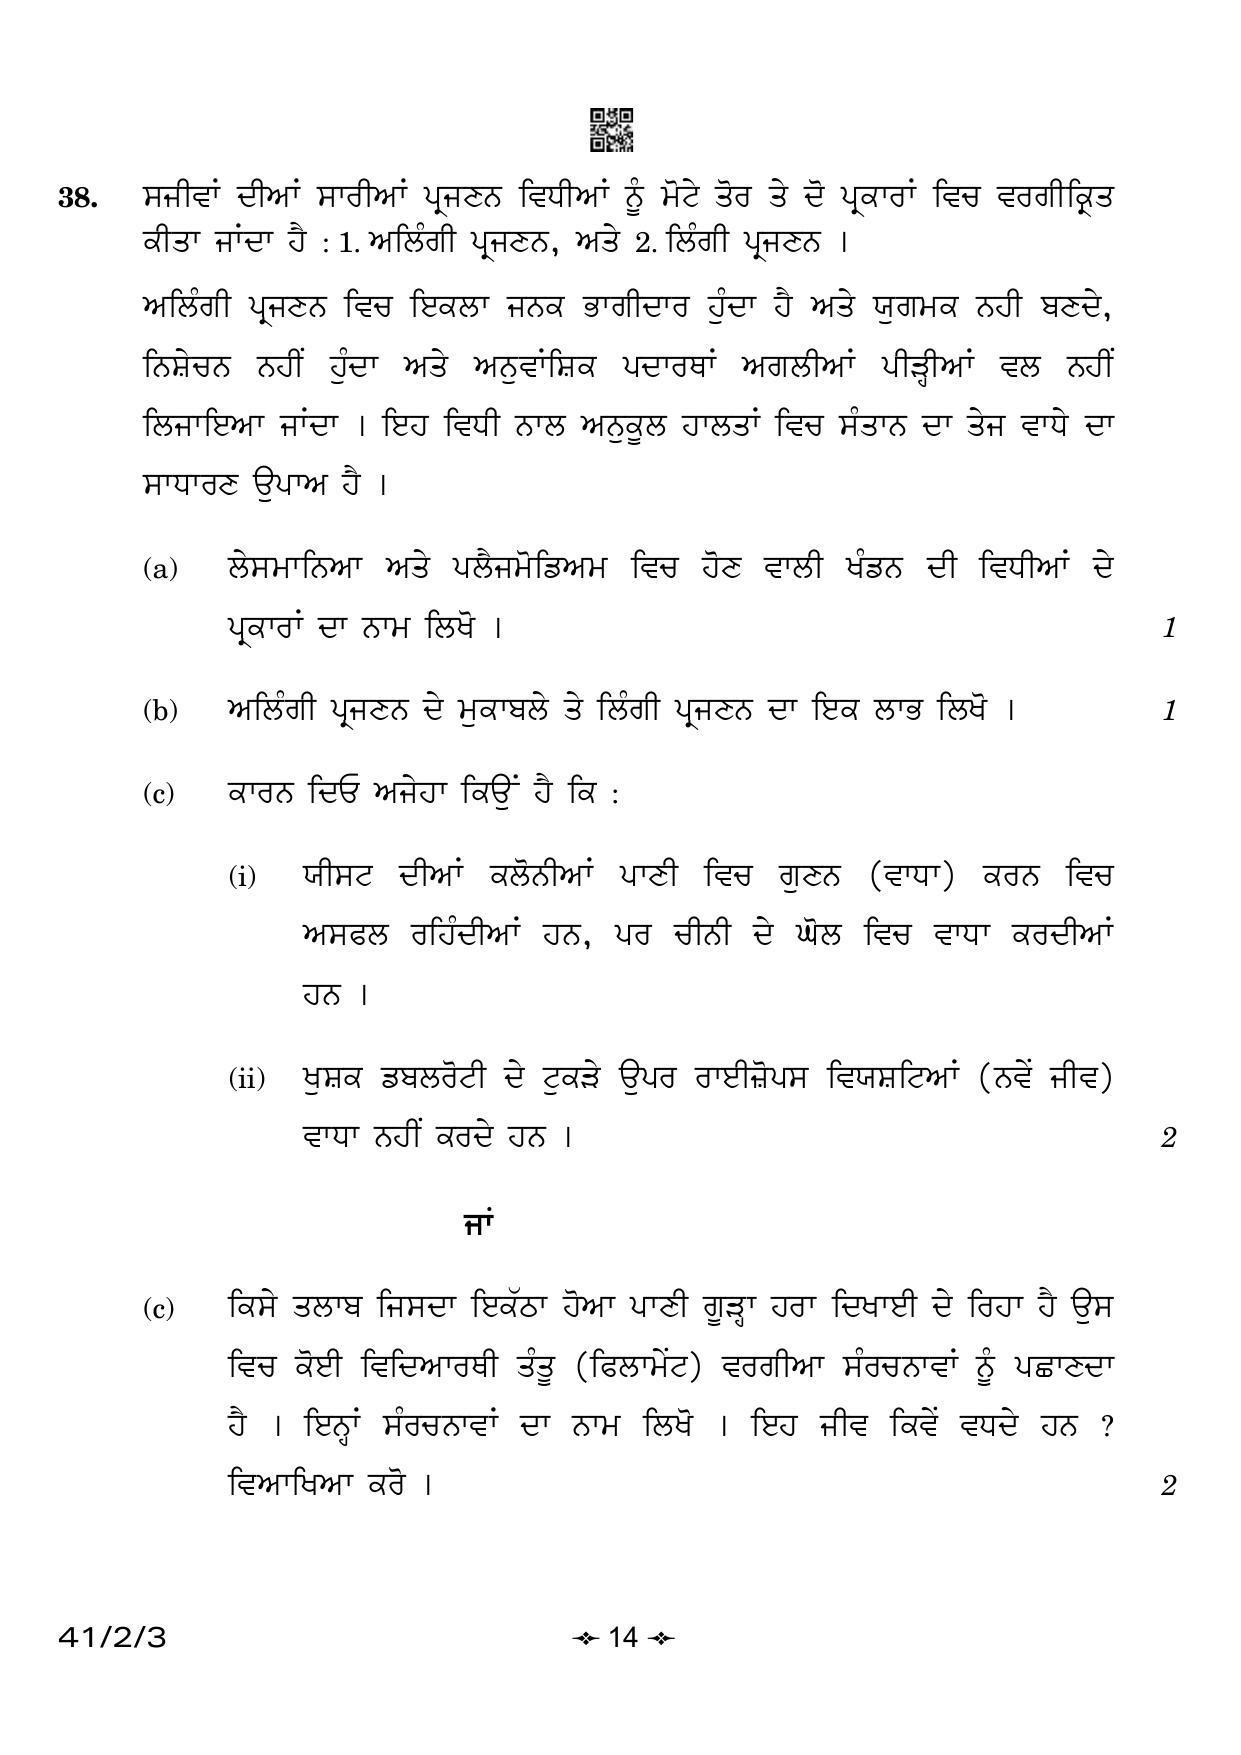 CBSE Class 10 41-2-3 Science Punjabi Version 2023 Question Paper - Page 14